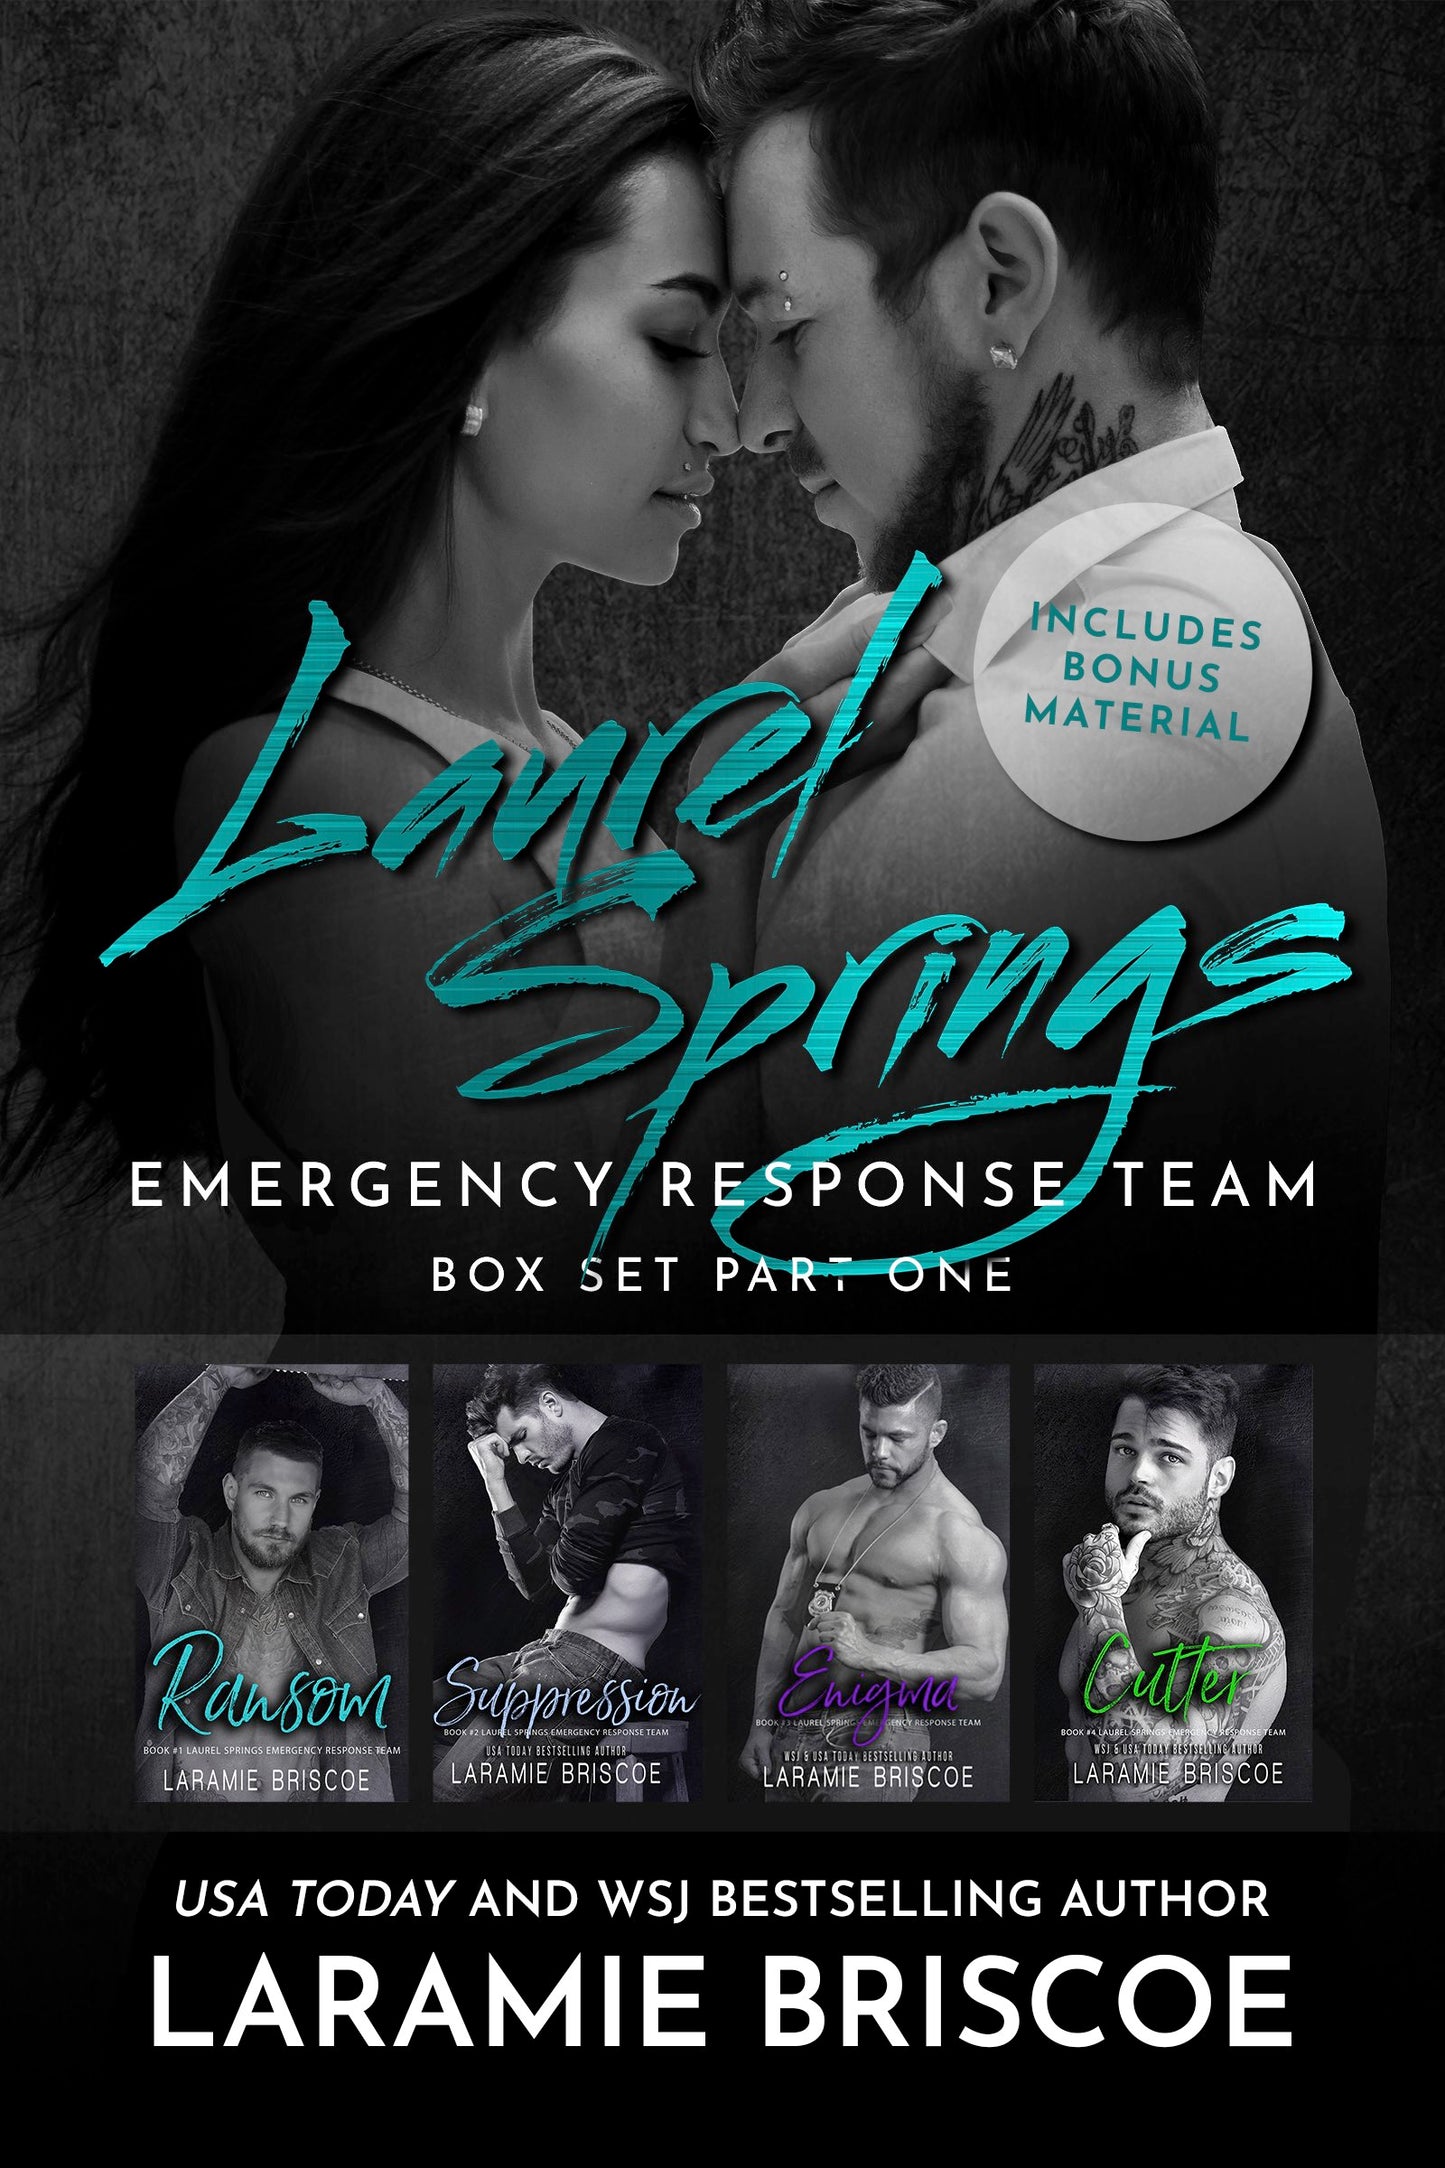 The Laurel Springs Emergency Response Team Box Set #1